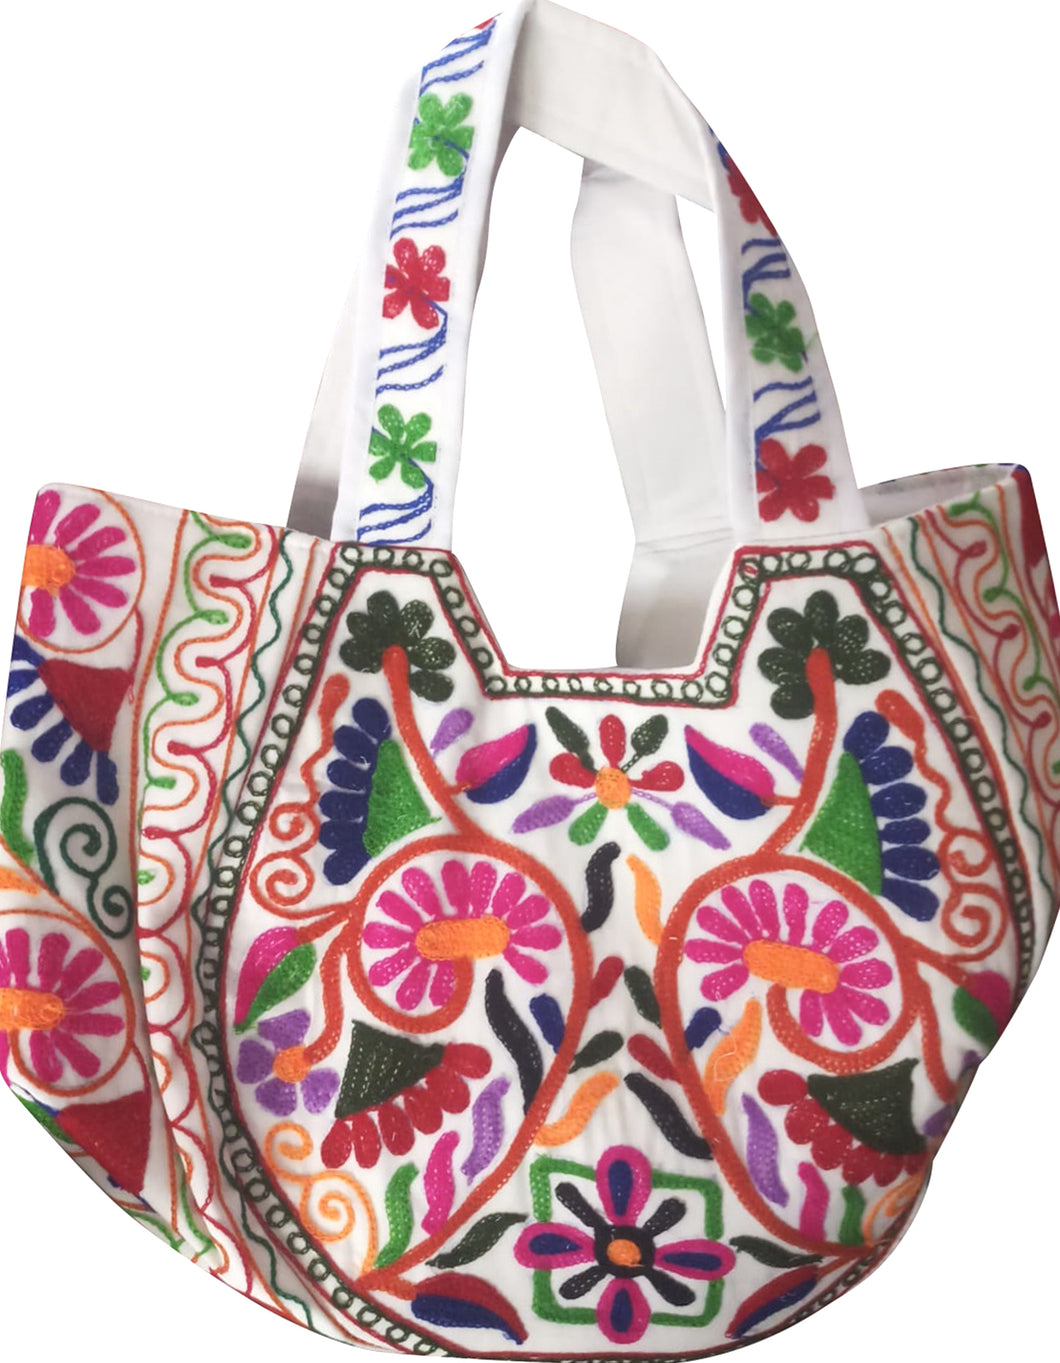 Embroidered bag with leaf design 53x41 cm